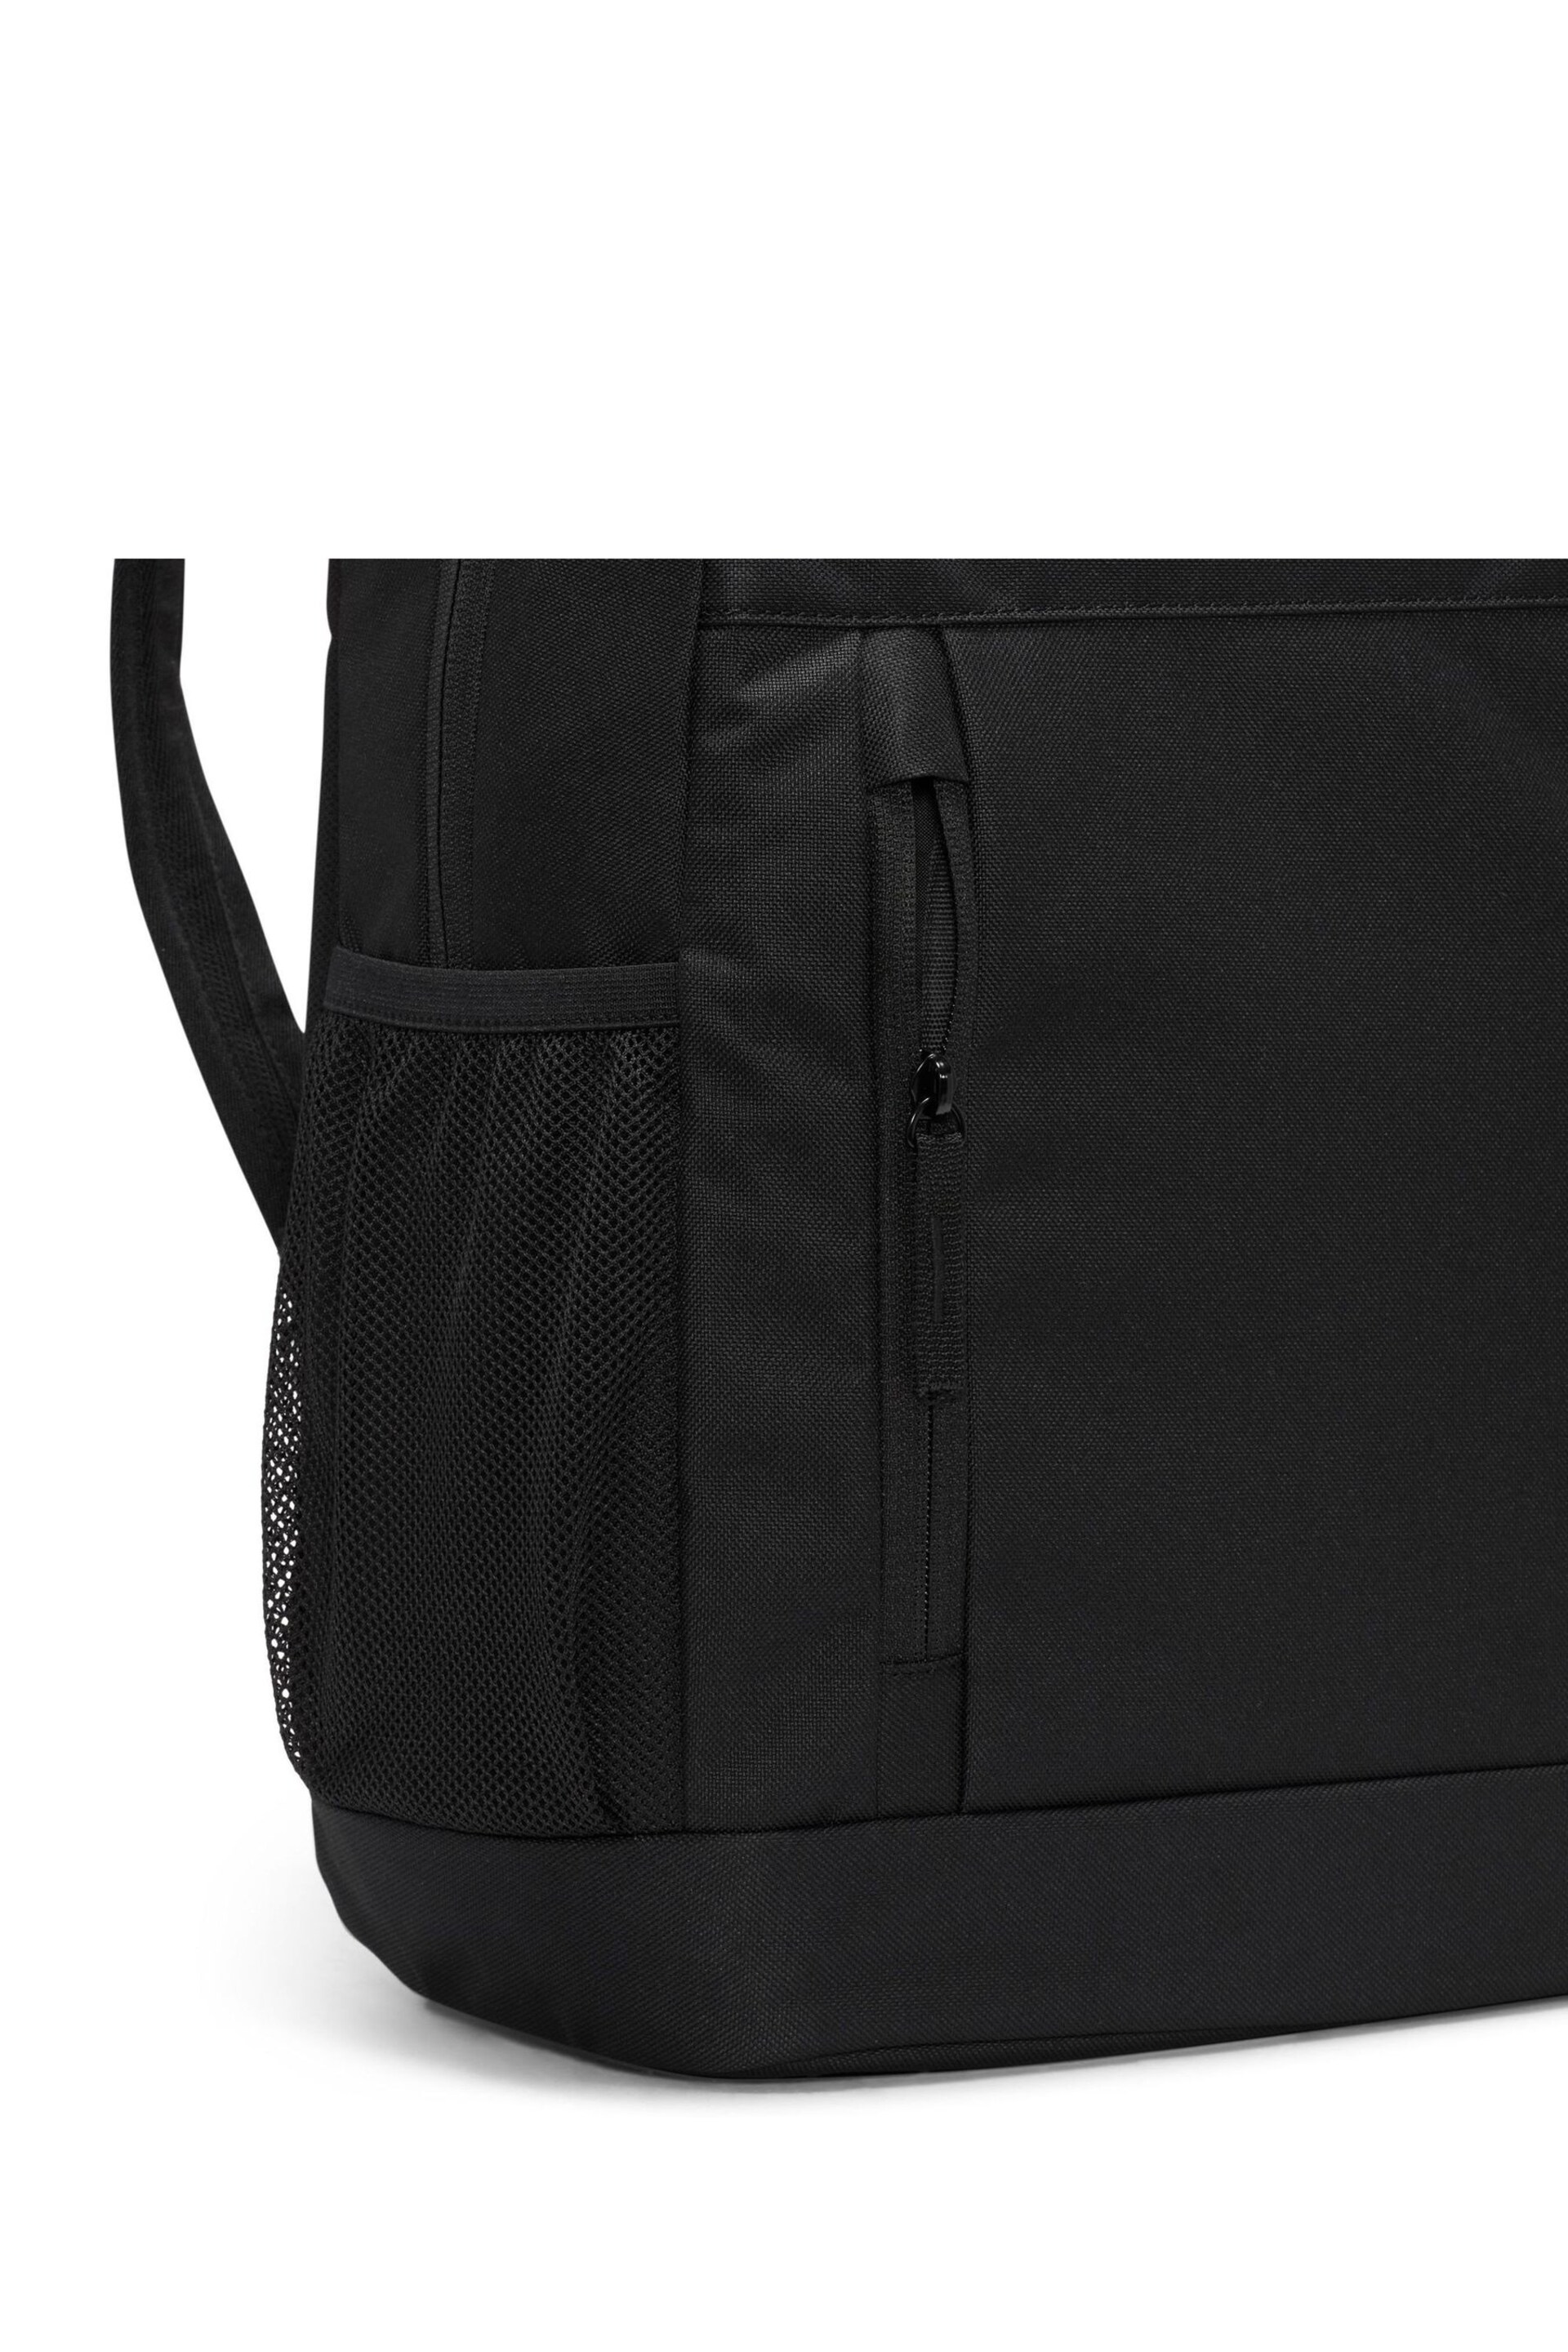 Nike Black Bag - Image 7 of 8